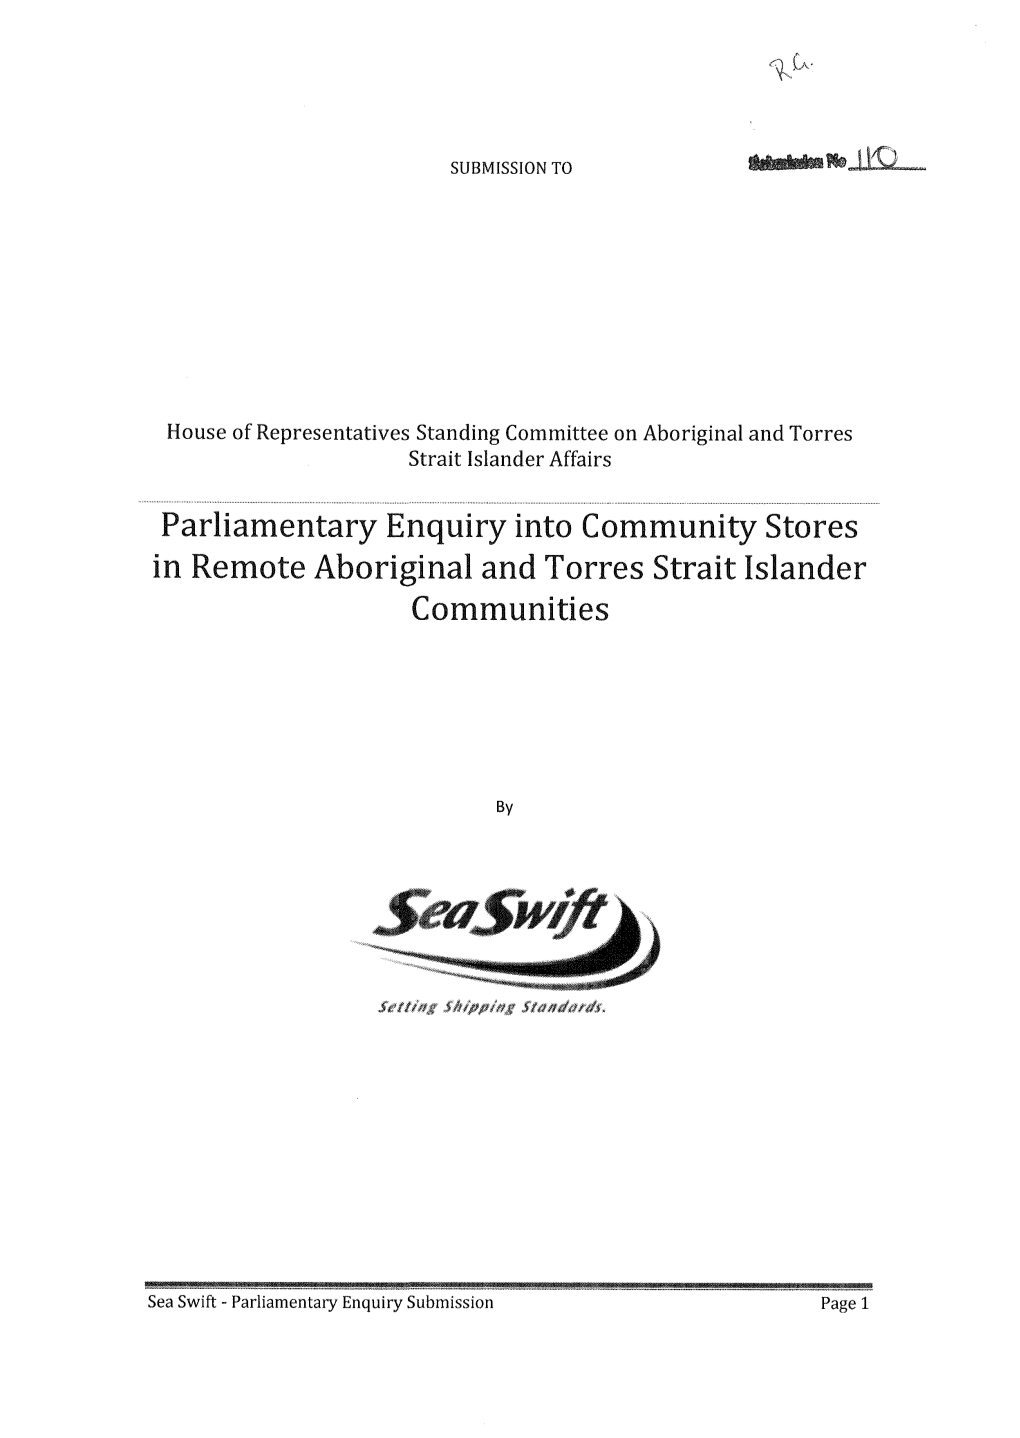 Parliamentary Enquiry Into Community Stores in Remote Aboriginal and Torres Strait Islander Communities